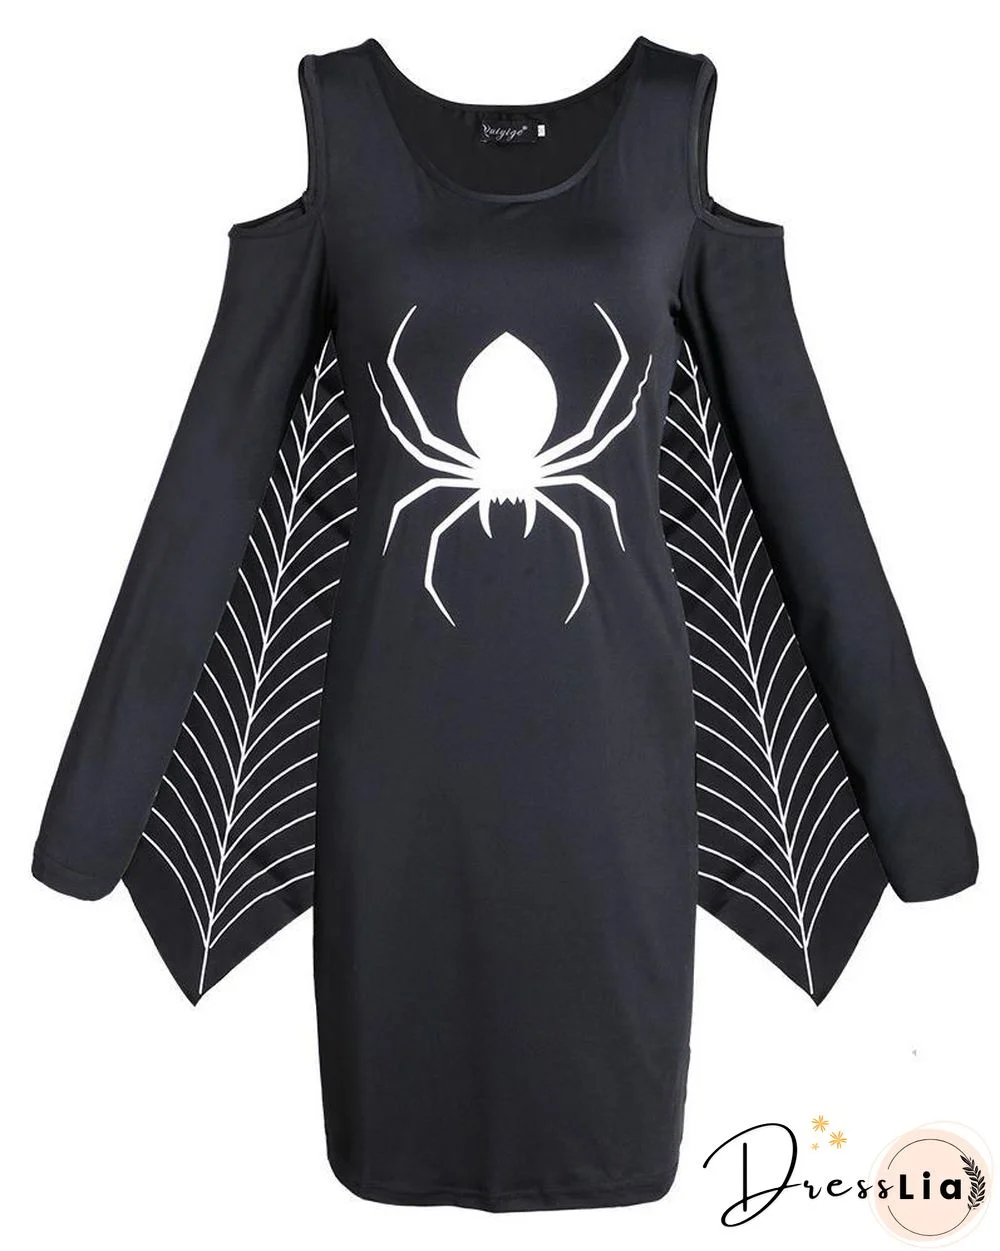 Halloween Giant Spider Print Women Fashion Casual Mini Dresses